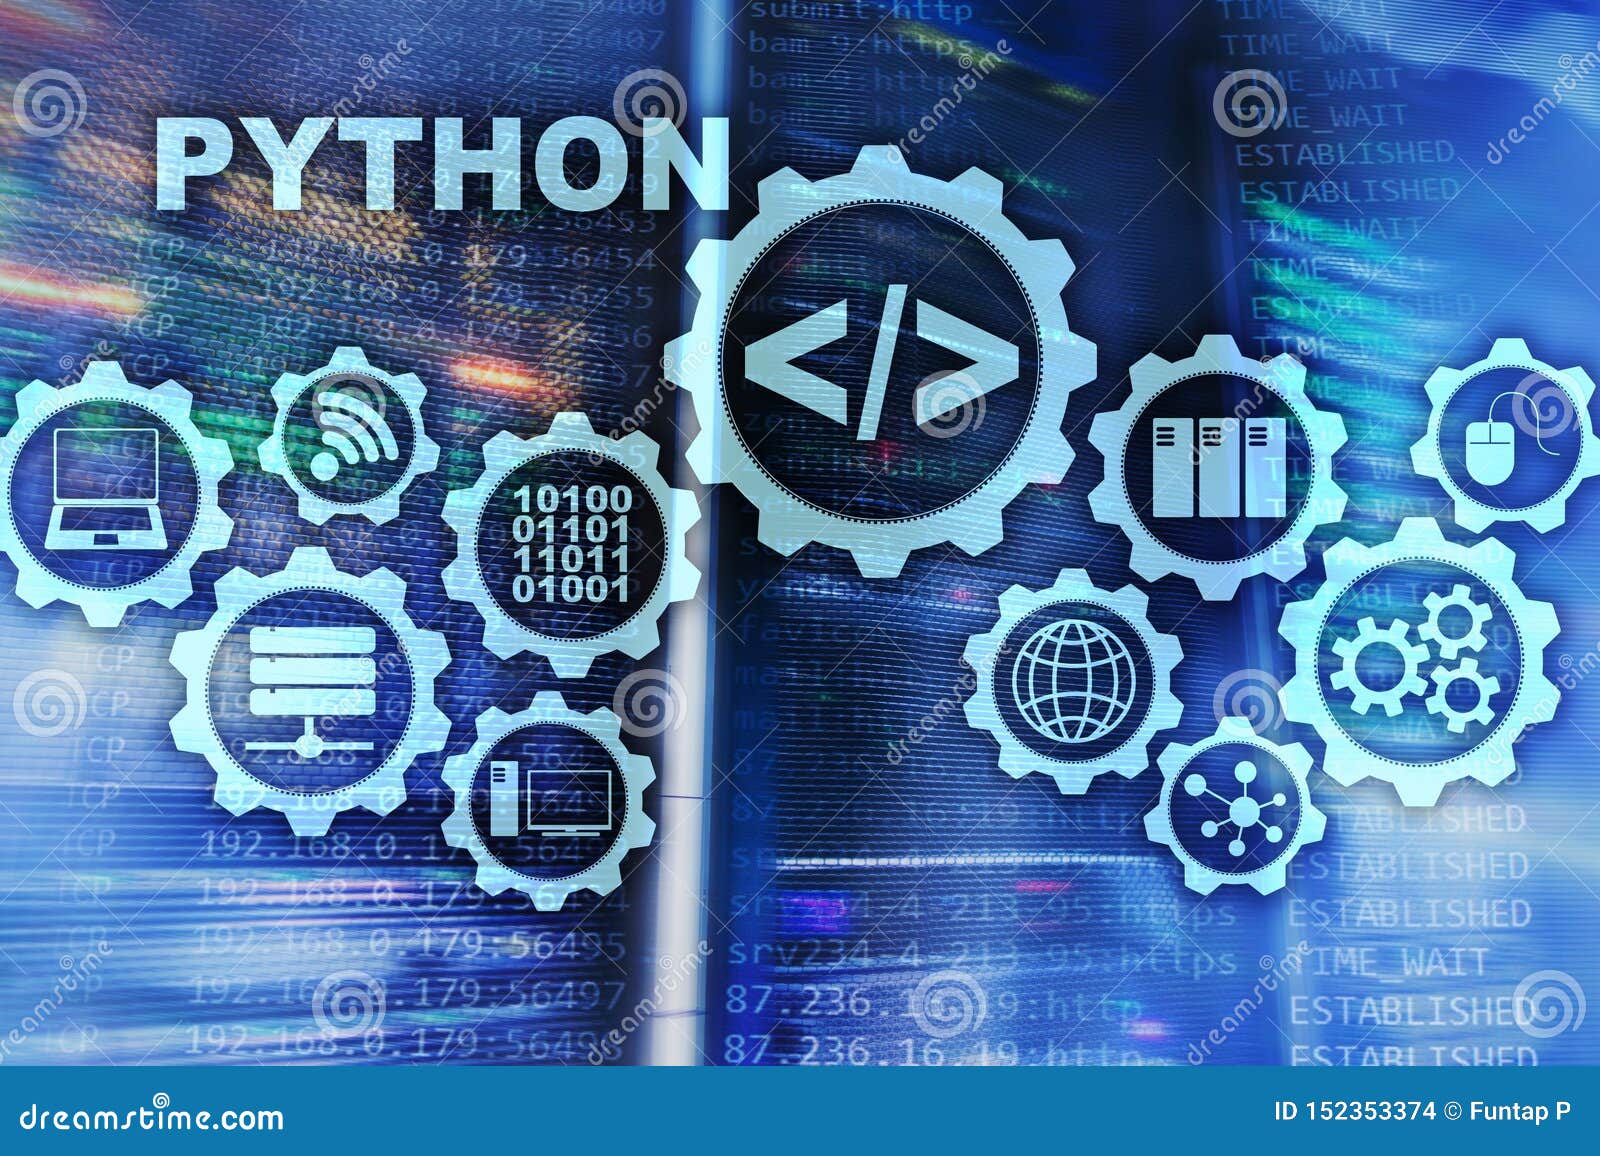 Python Programming Language on Server Room Background. Programing Workflow  Abstract Algorithm Concept on Virtual Screen Stock Illustration -  Illustration of pressing, coding: 152353374